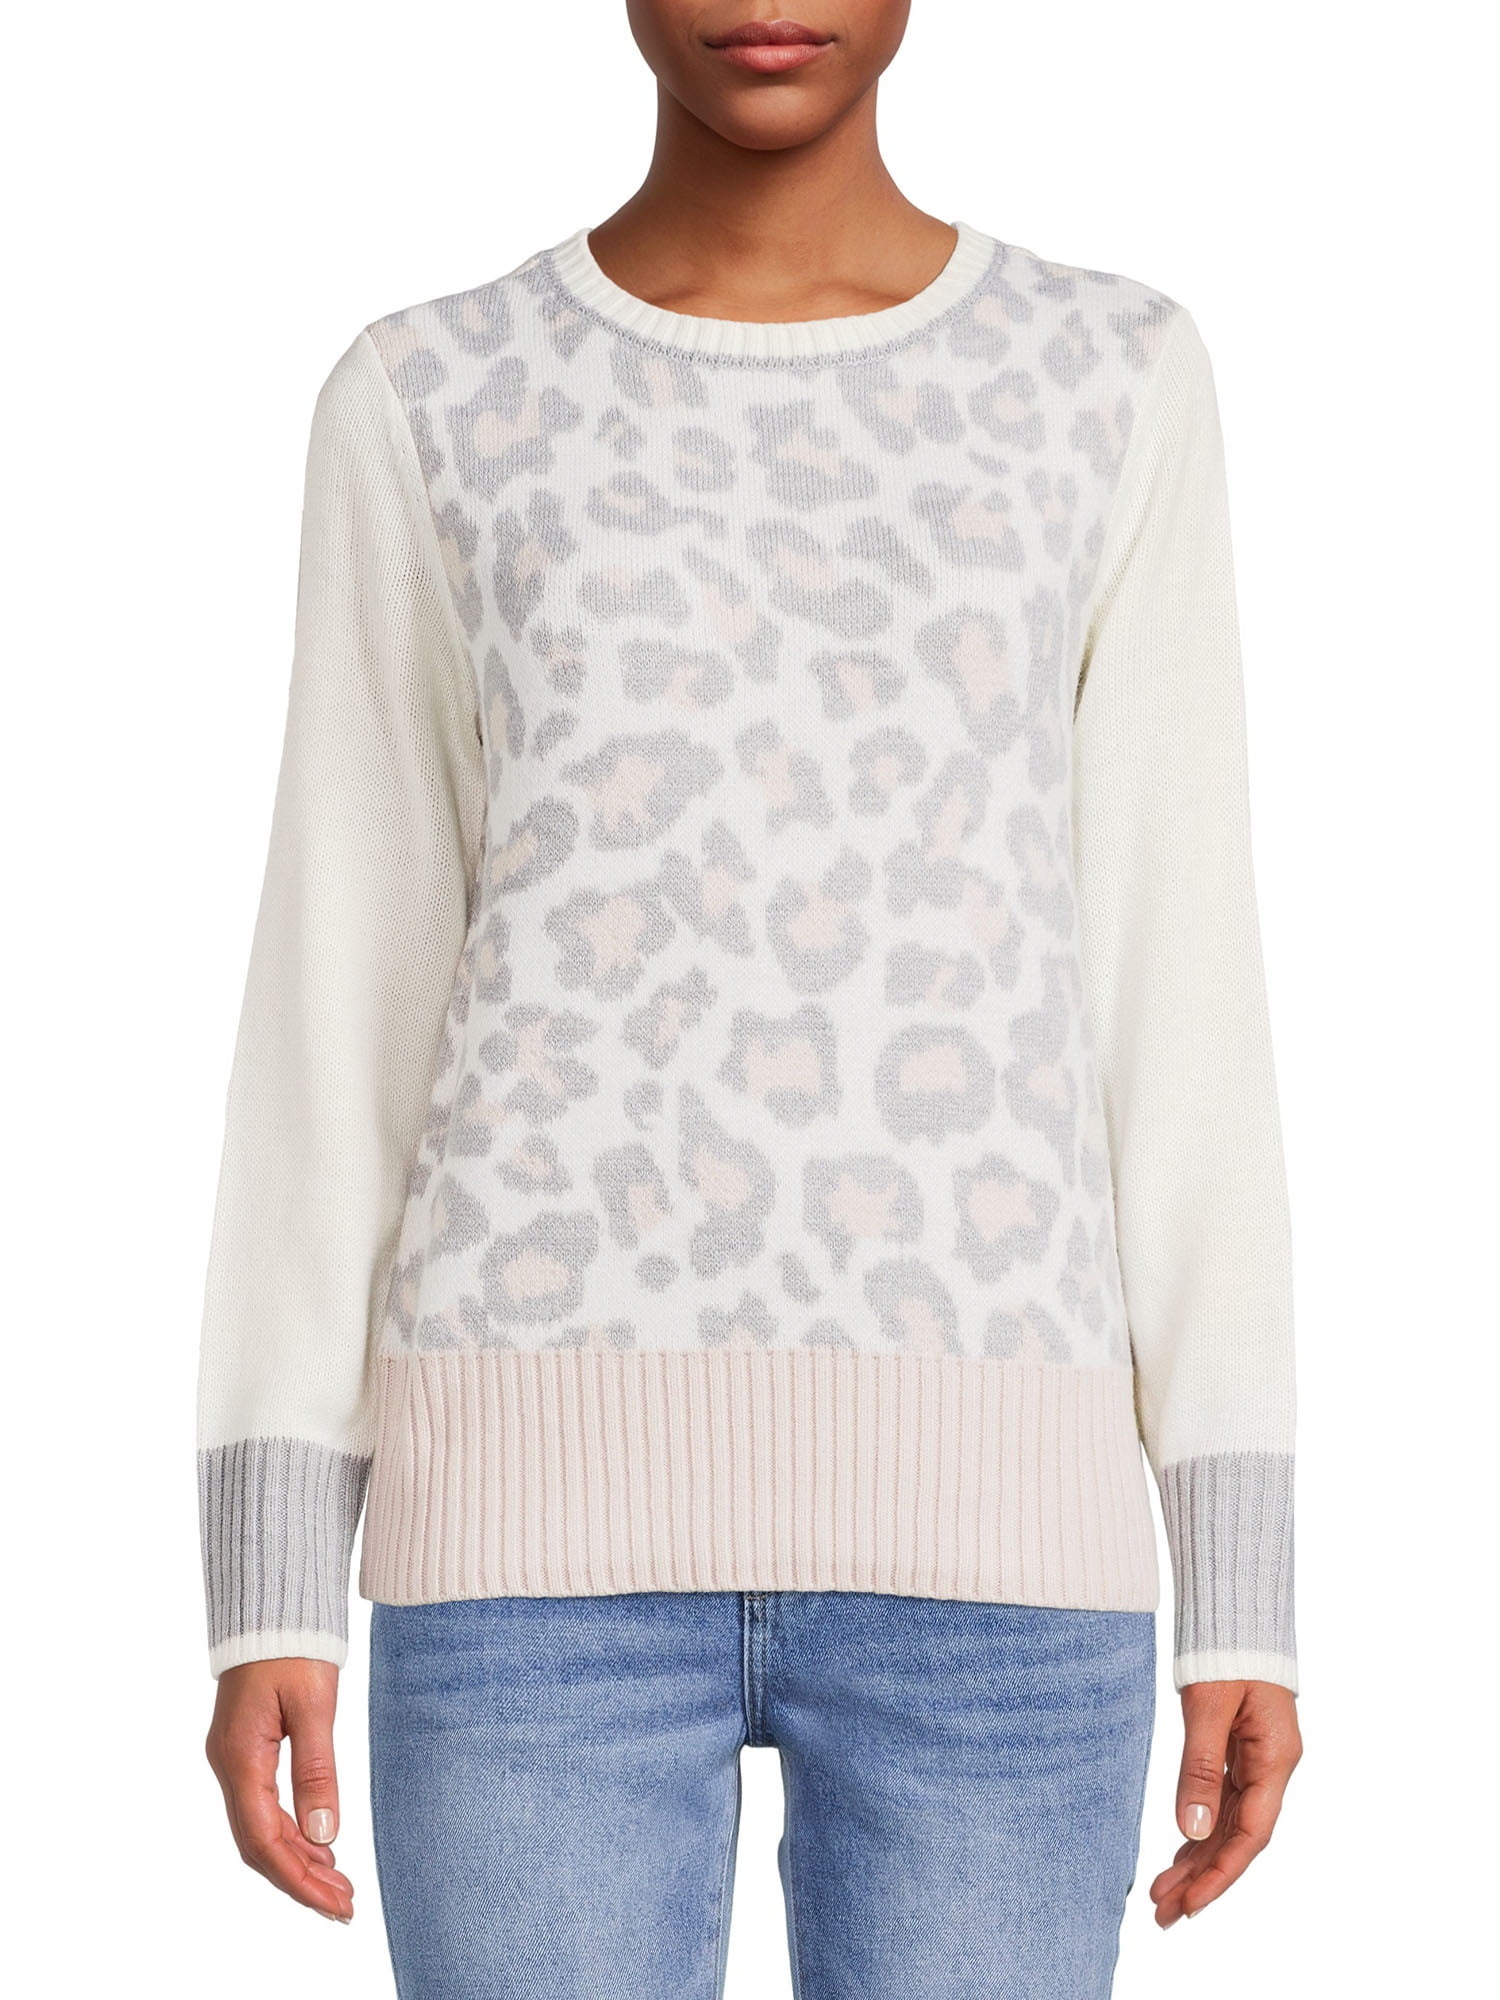 BeachLunchLounge Women's Leopard Pullover Sweater